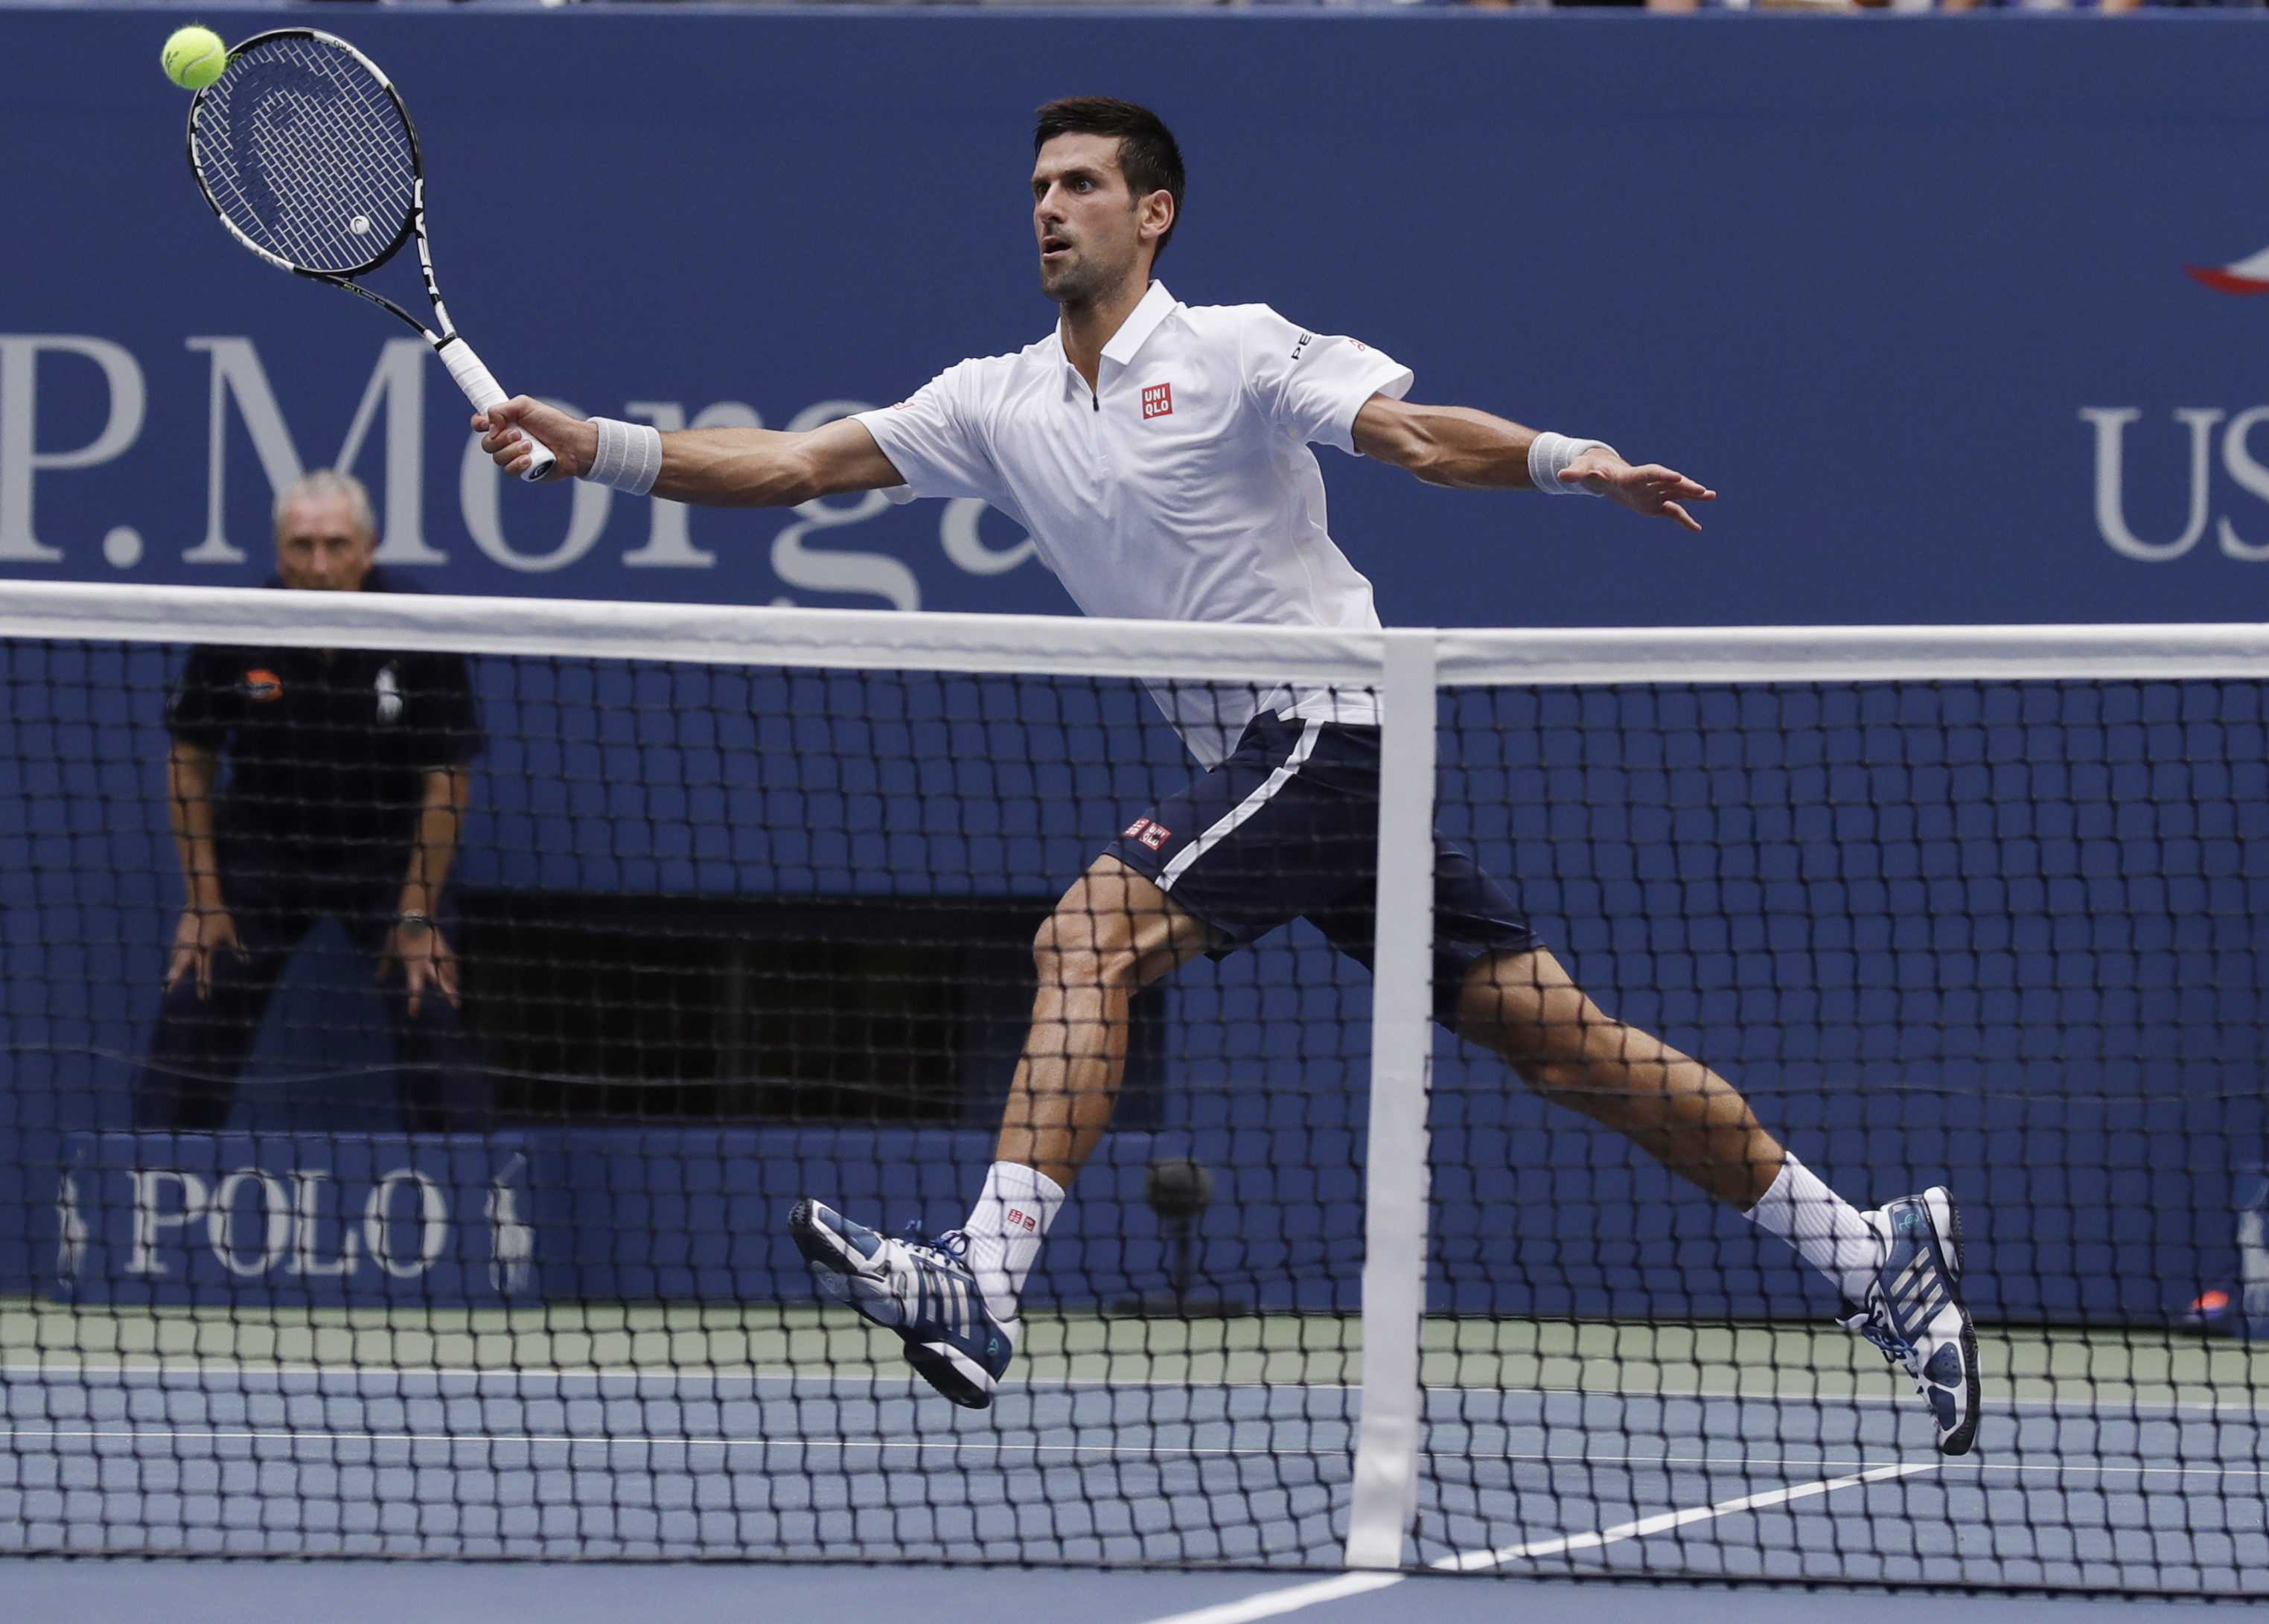 Descarga gratis la imagen Tenis, Serbio, Deporte, Novak Djokovic en el escritorio de tu PC